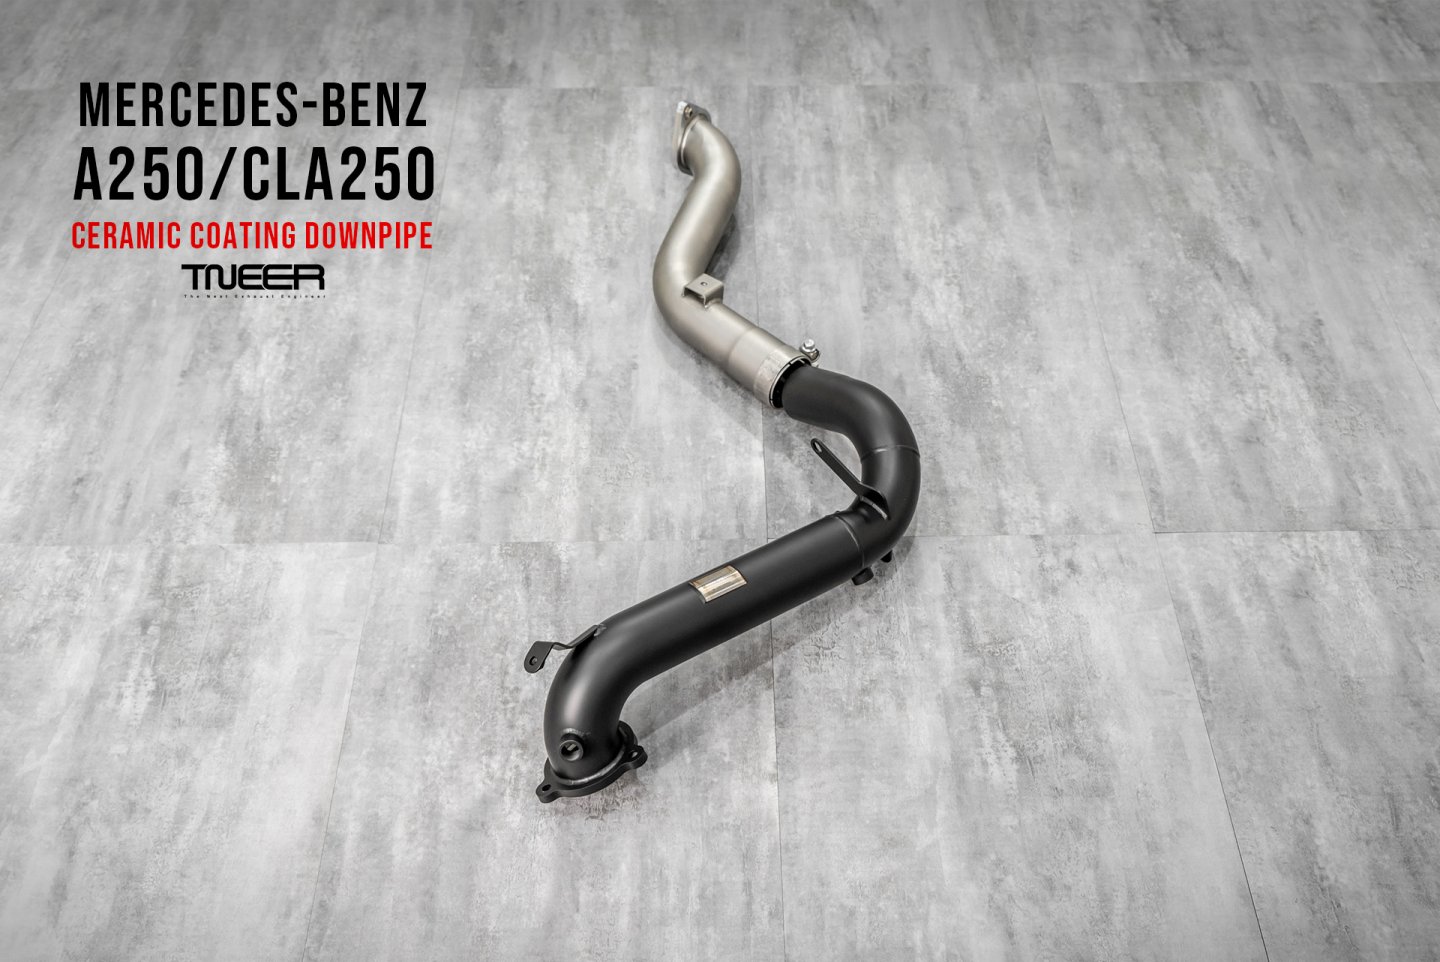 Mercedes-Benz C118 CLA250 Performance TNEER Exhaust System